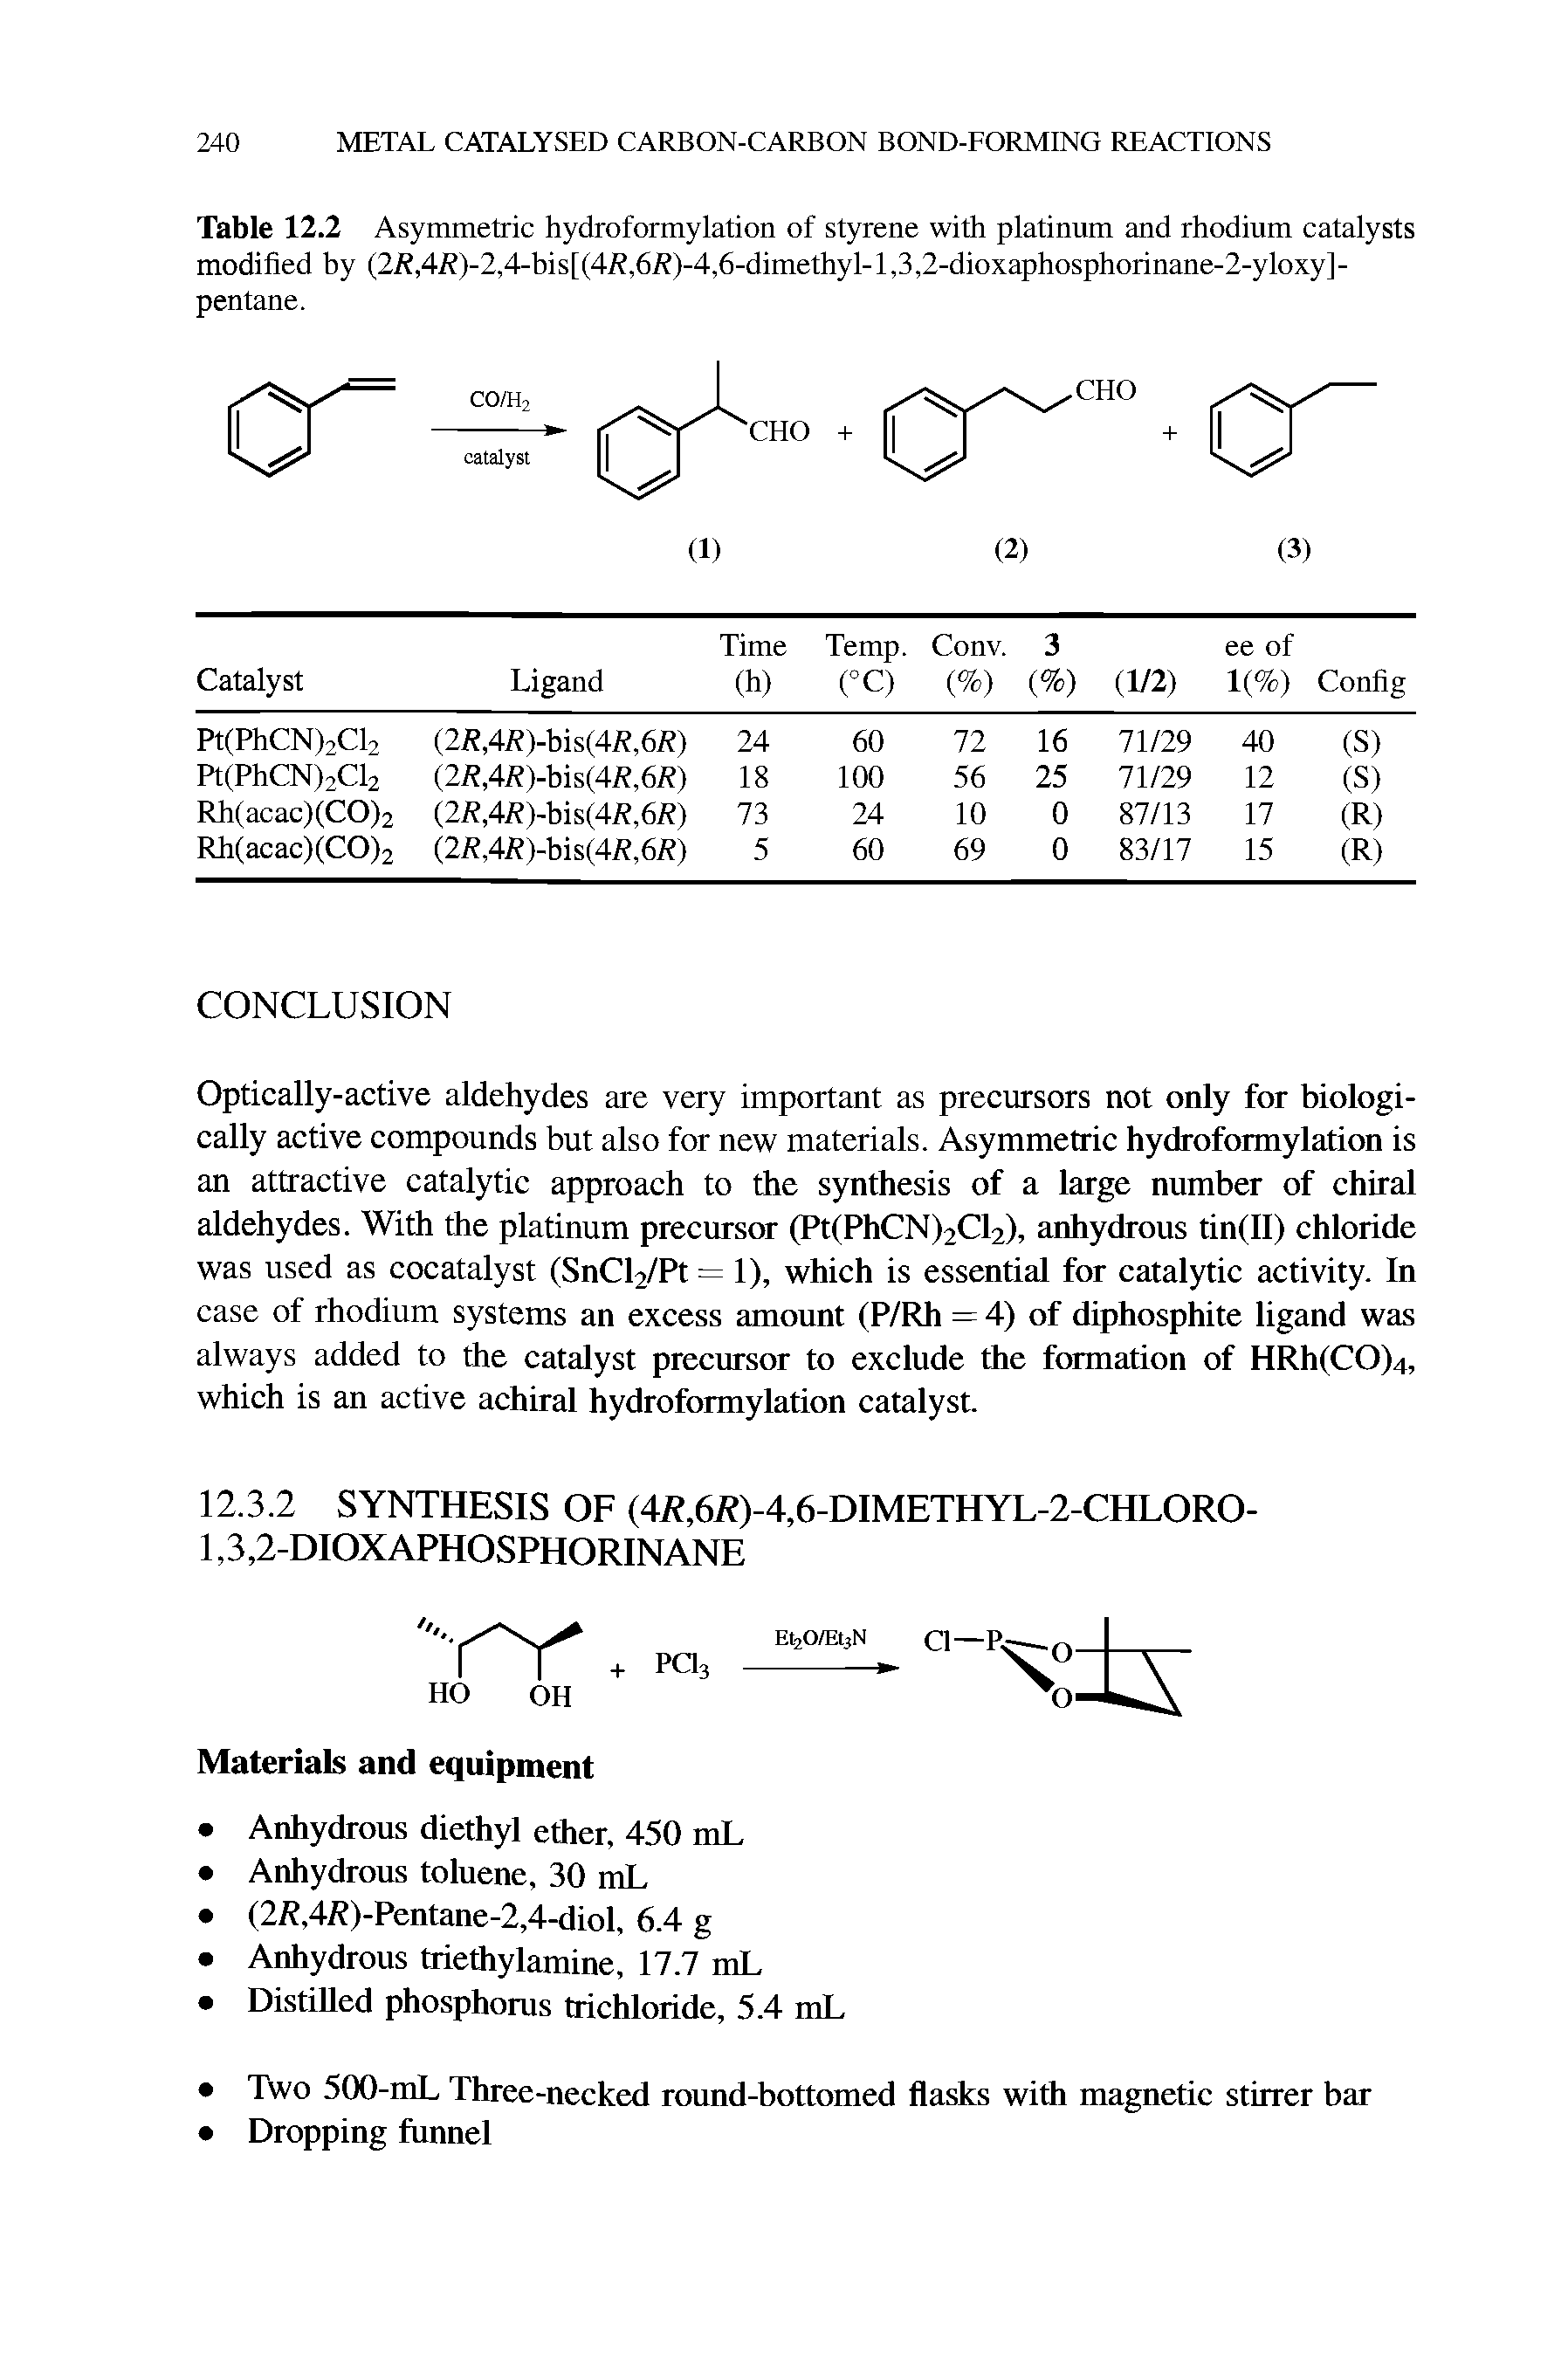 Table 12.2 Asymmetric hydroformylation of styrene with platinum and rhodium catalysts modified by (2, 4R)-2,4-bis[(4,R,6R)-4,6-dimethyl-l,3,2-dioxaphosphorinane-2-yloxy]-pentane.